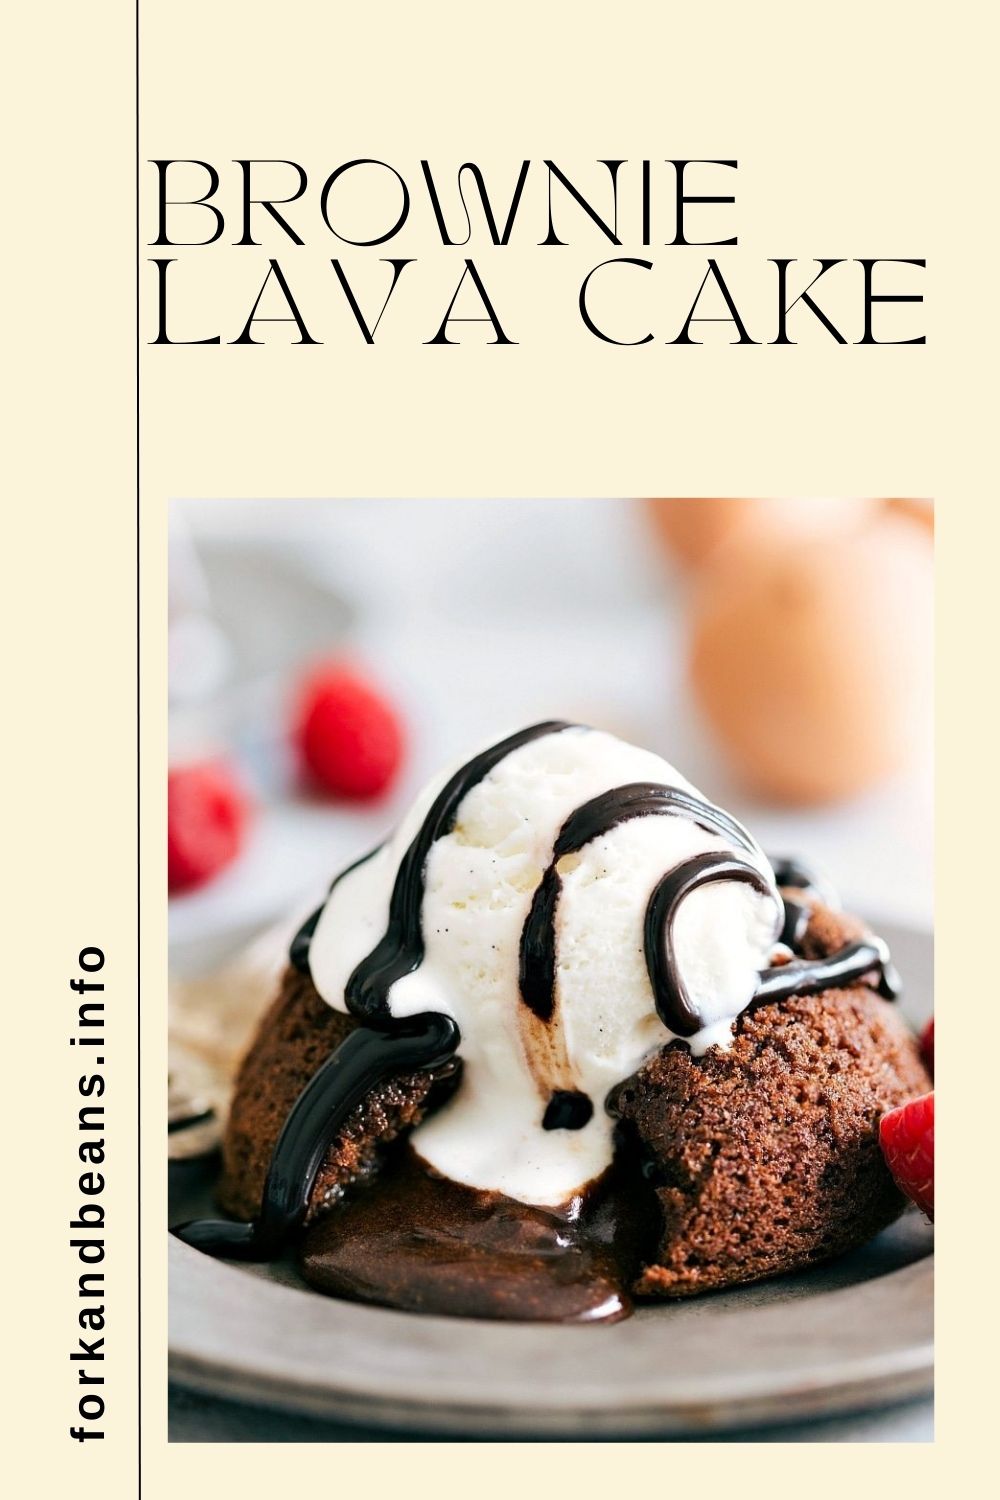 CHOCOLATE LAVA CAKE, melted